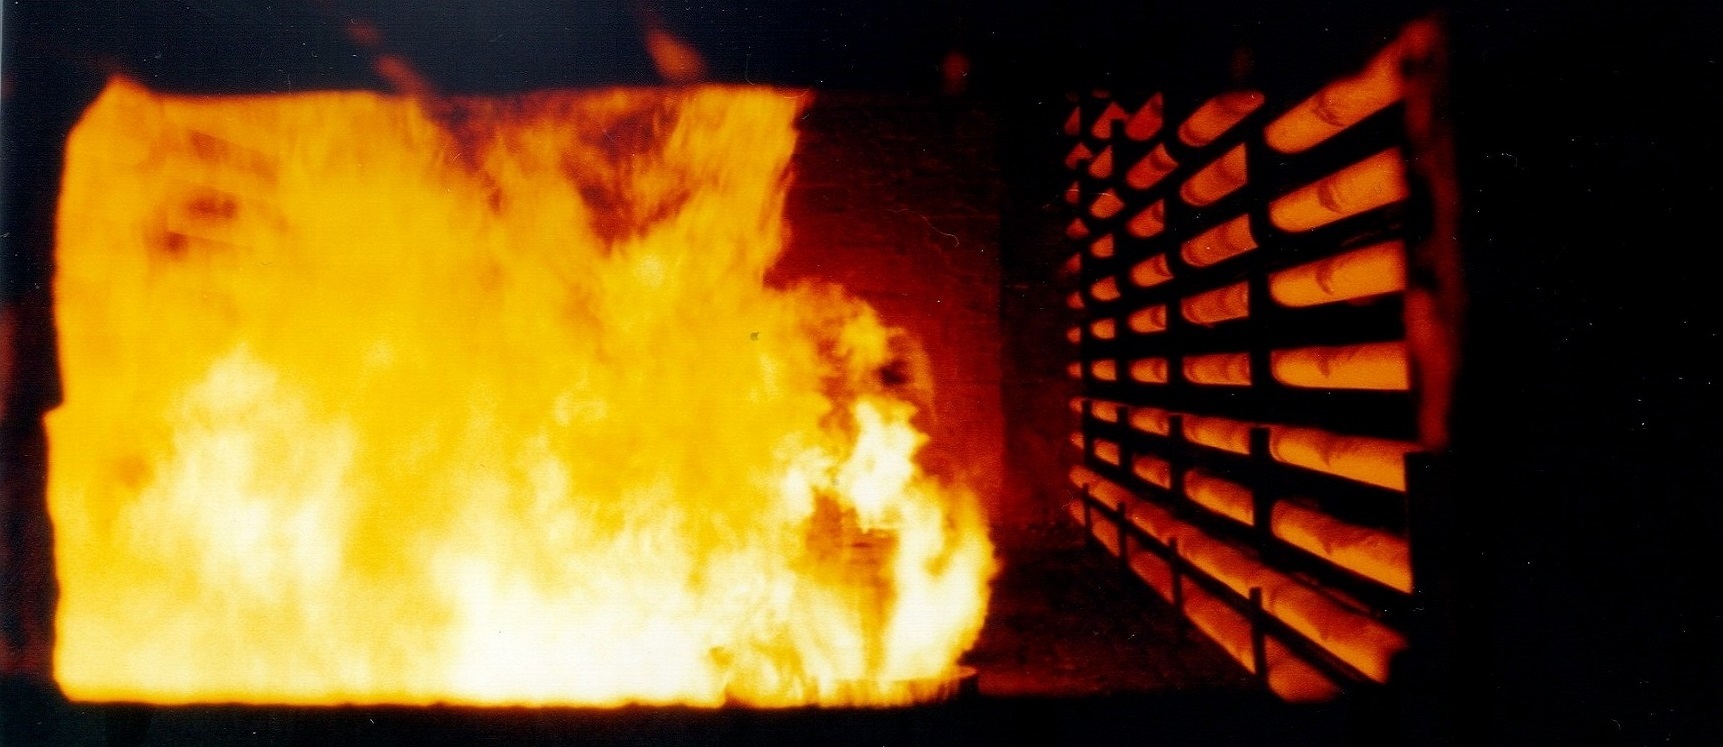 Inside Cabin Fired Heater, API 560 Cabin Fired Heater, API Furnace, API Horizontal Tube Heater, Cabin Heater Burner Flames, Burner Firing inside Furnace, Burner Firing inside fired heater